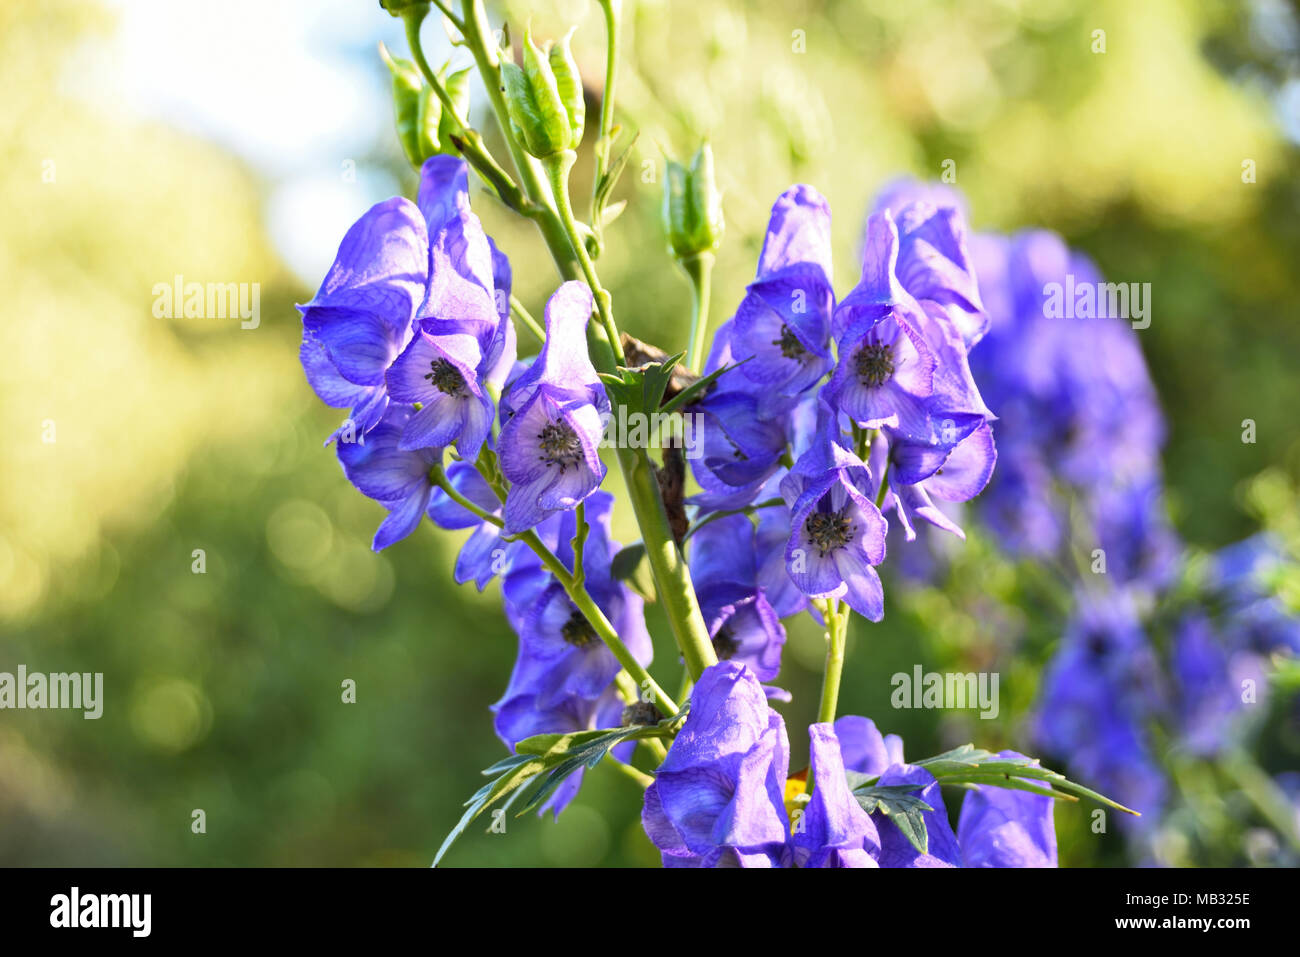 Blue helmet flower or aconite flower in the sunlight. Closeup shot of purple flowers. Stock Photo